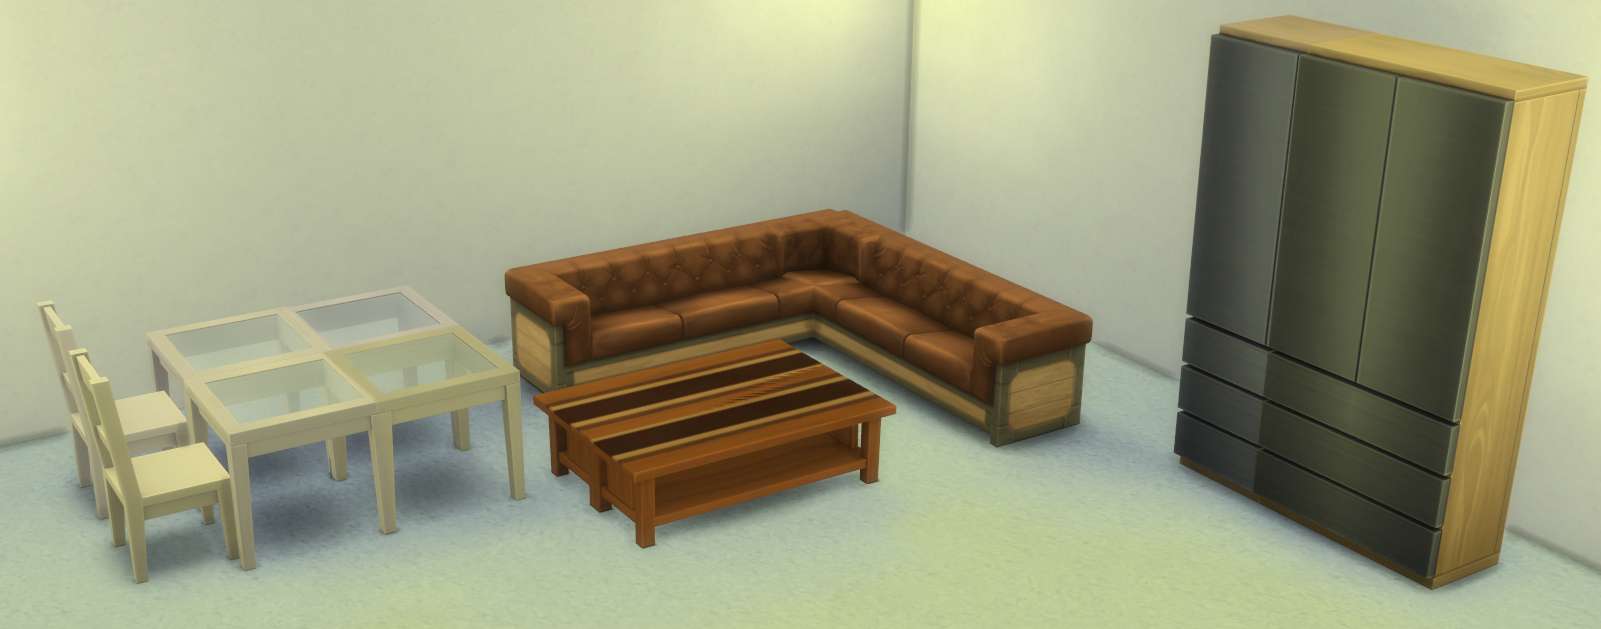 sims 4 cheat furniture